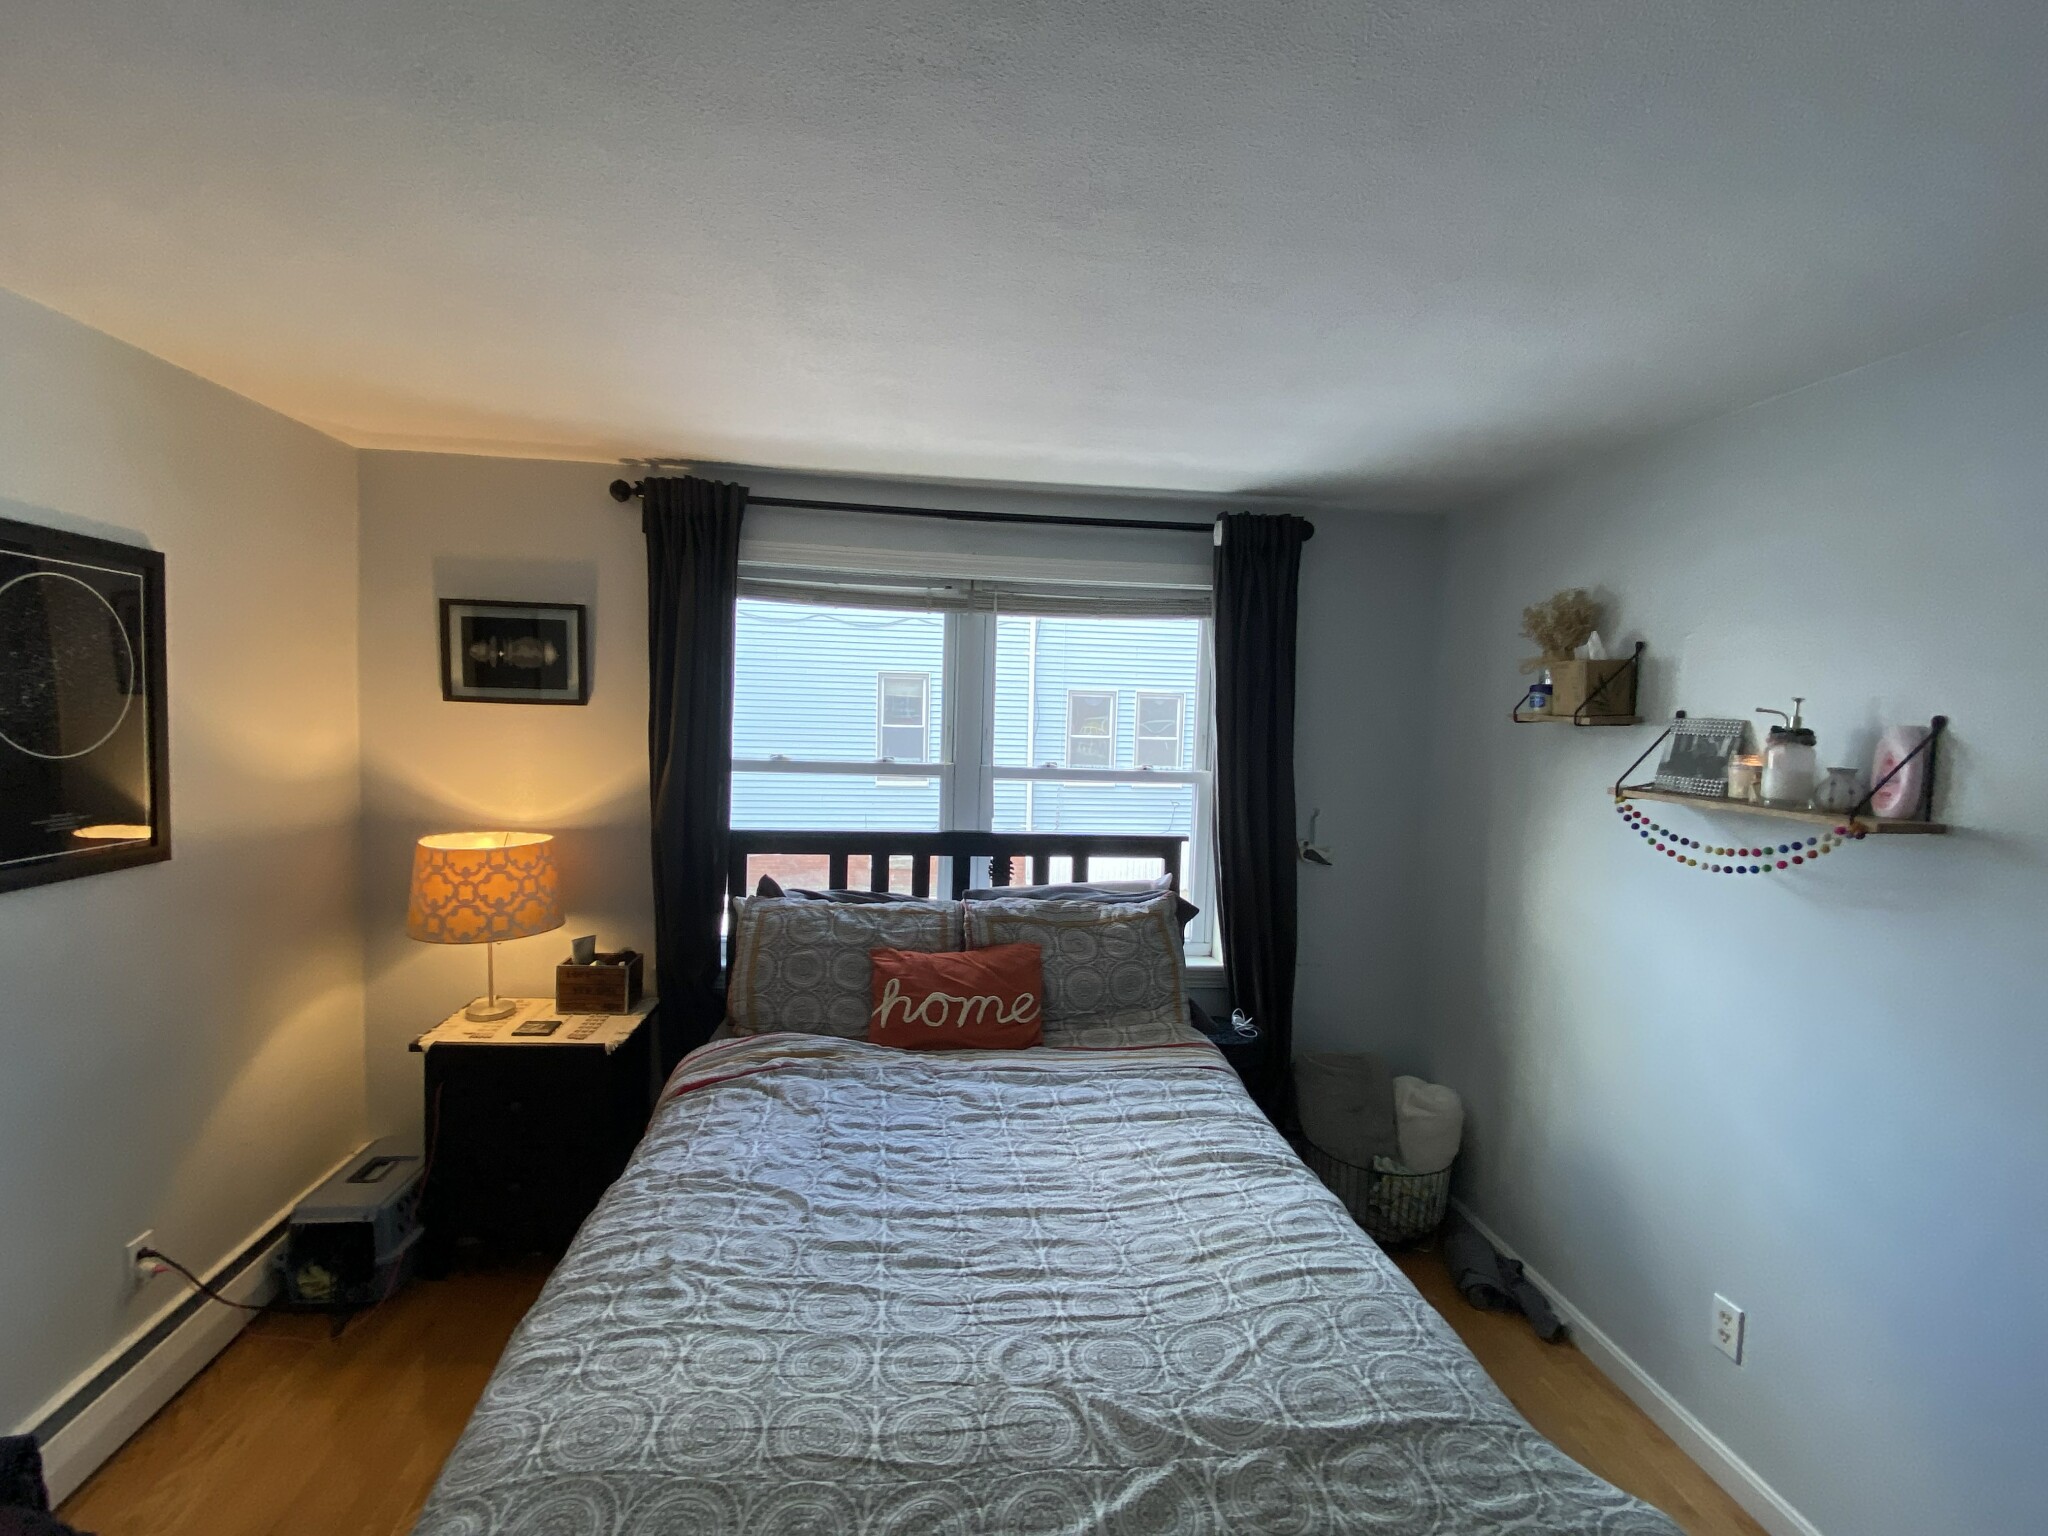 Photos of apartment on Beacon Pl.,Somerville MA 02143